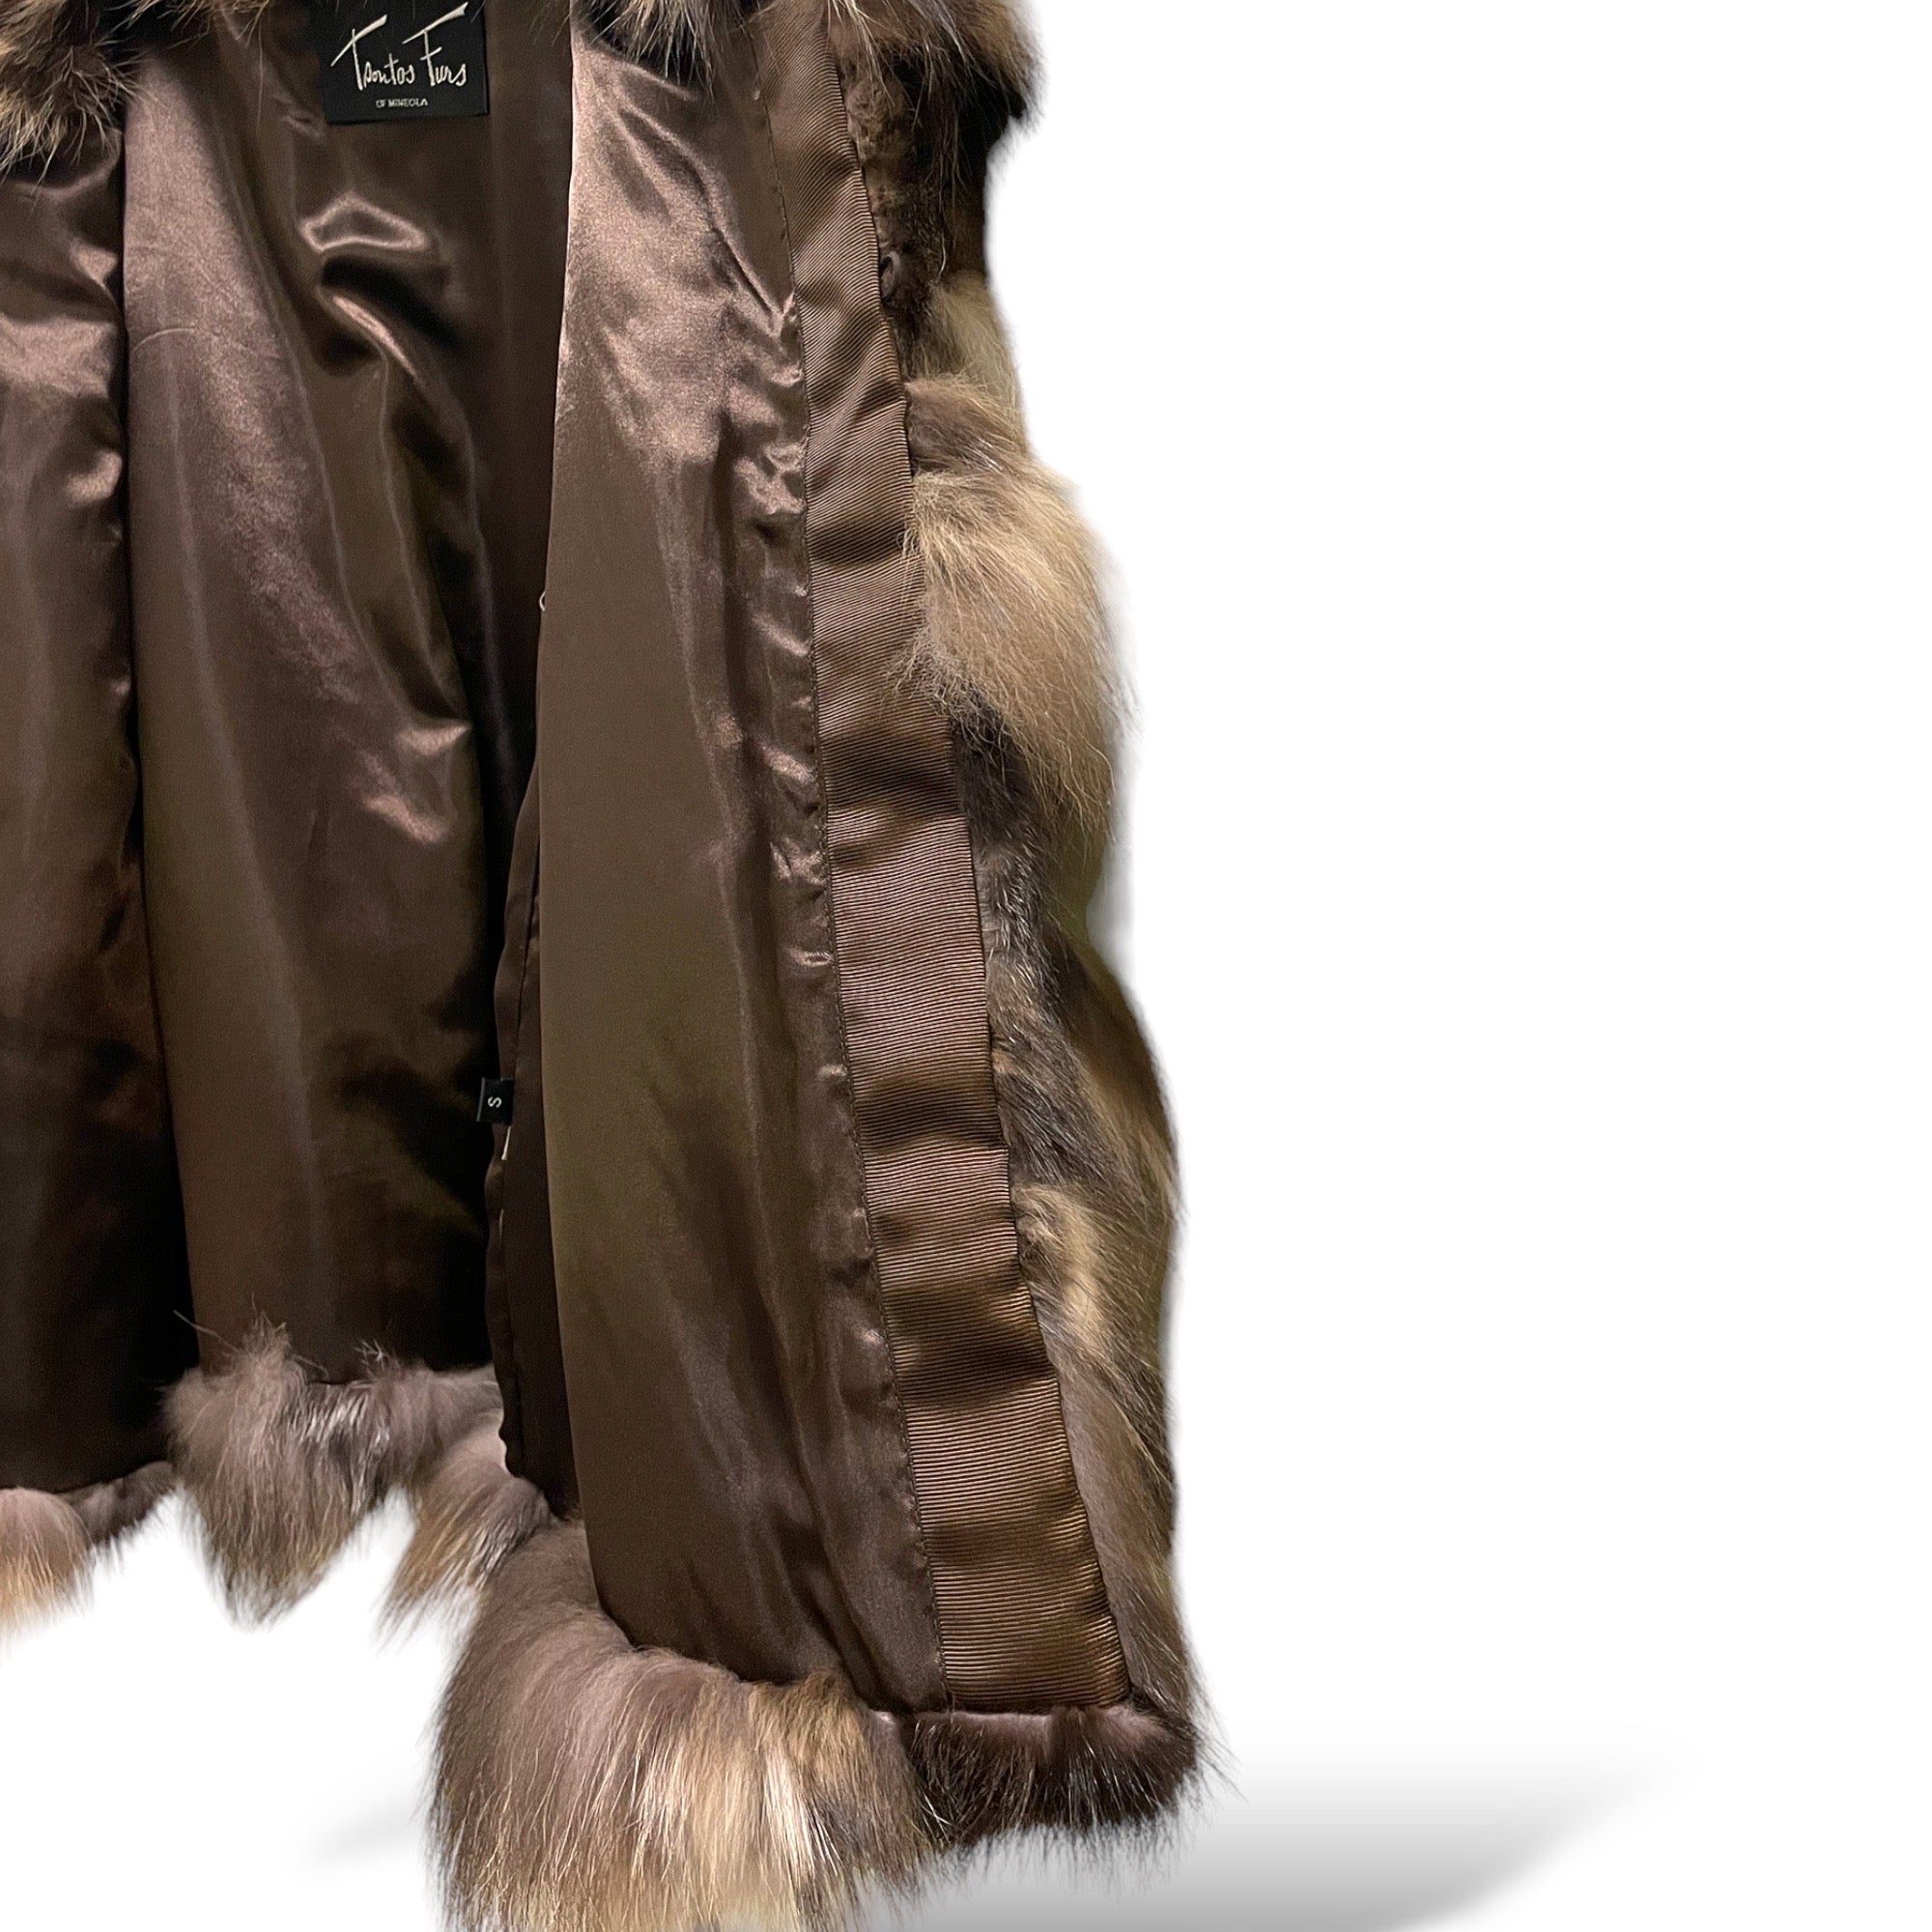 TSONTOS Custom Made STUNNING Multi-Color Fox Fur Coat

| Size: Small |